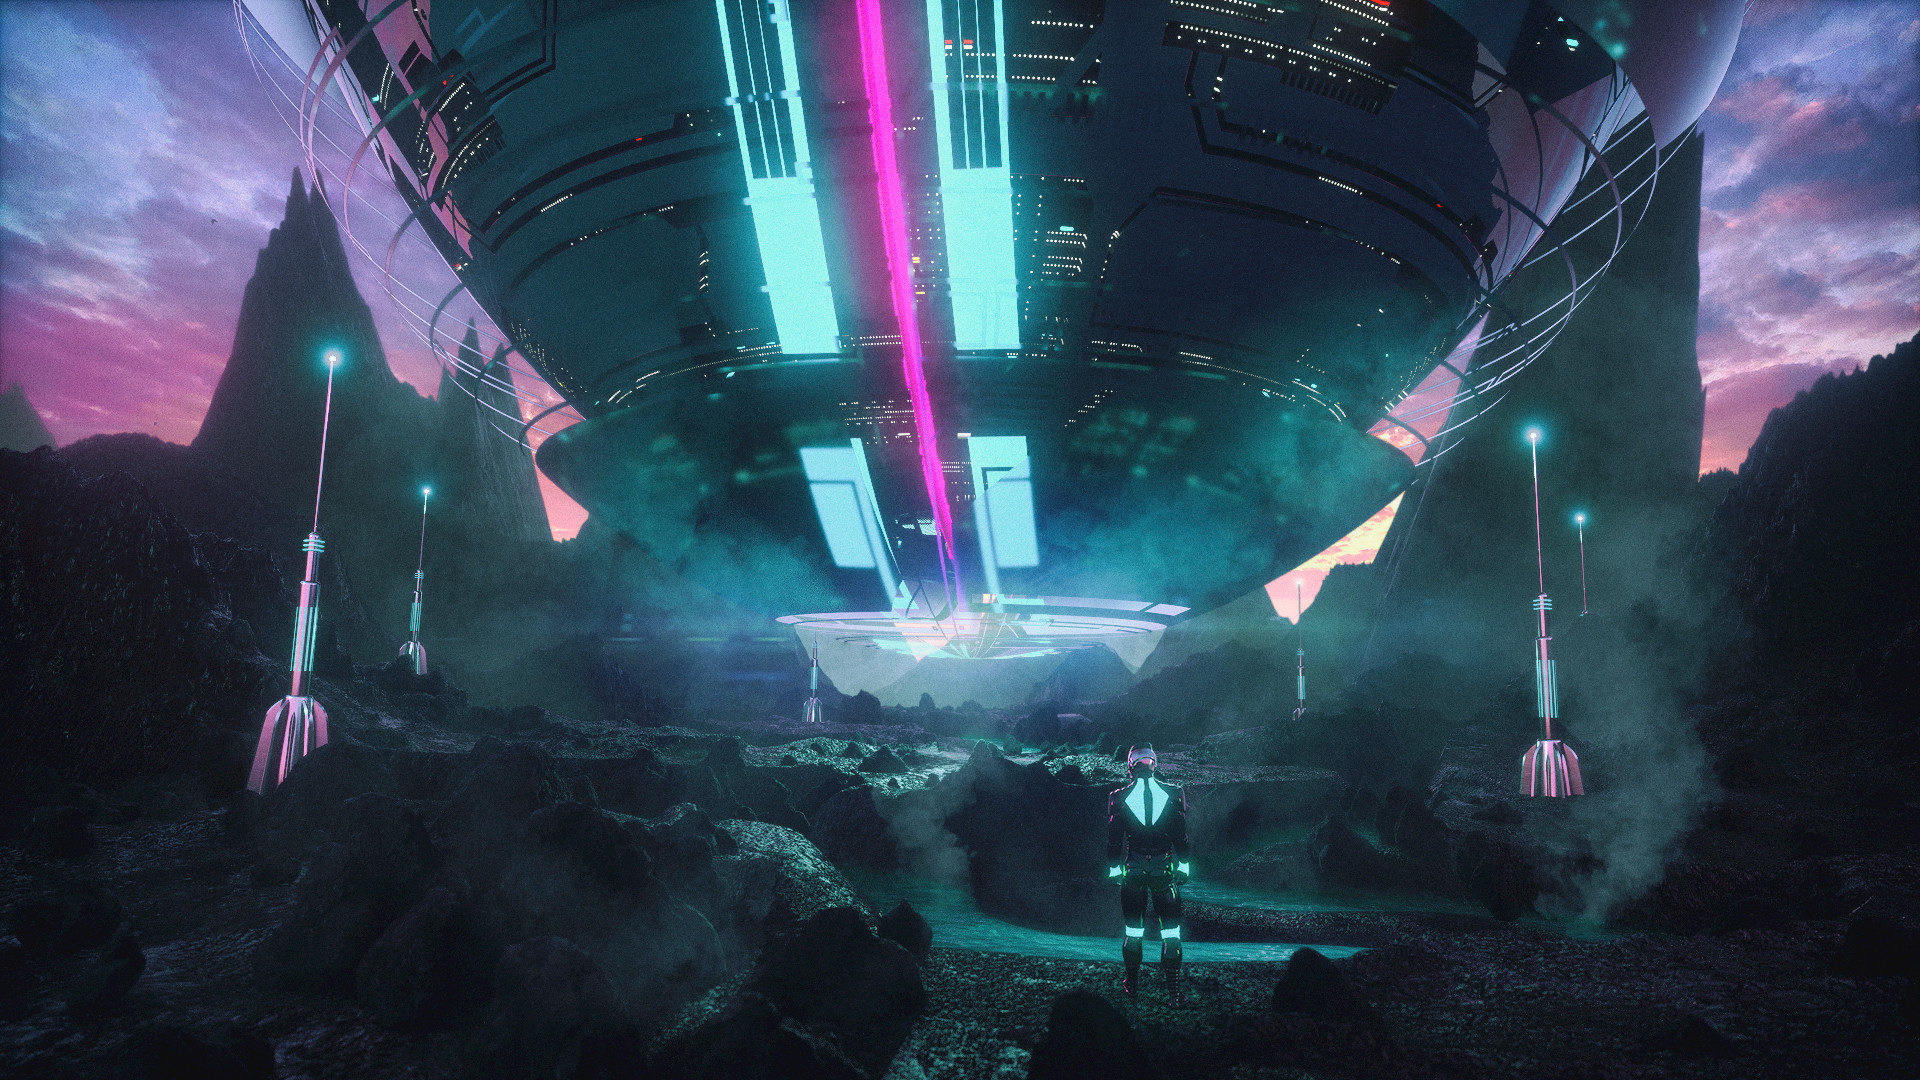 David Legnon Science Fiction Beacon Offworld Rocks Neon Glow Purple Cyan Mist Suits Artwork Futurist 1920x1080